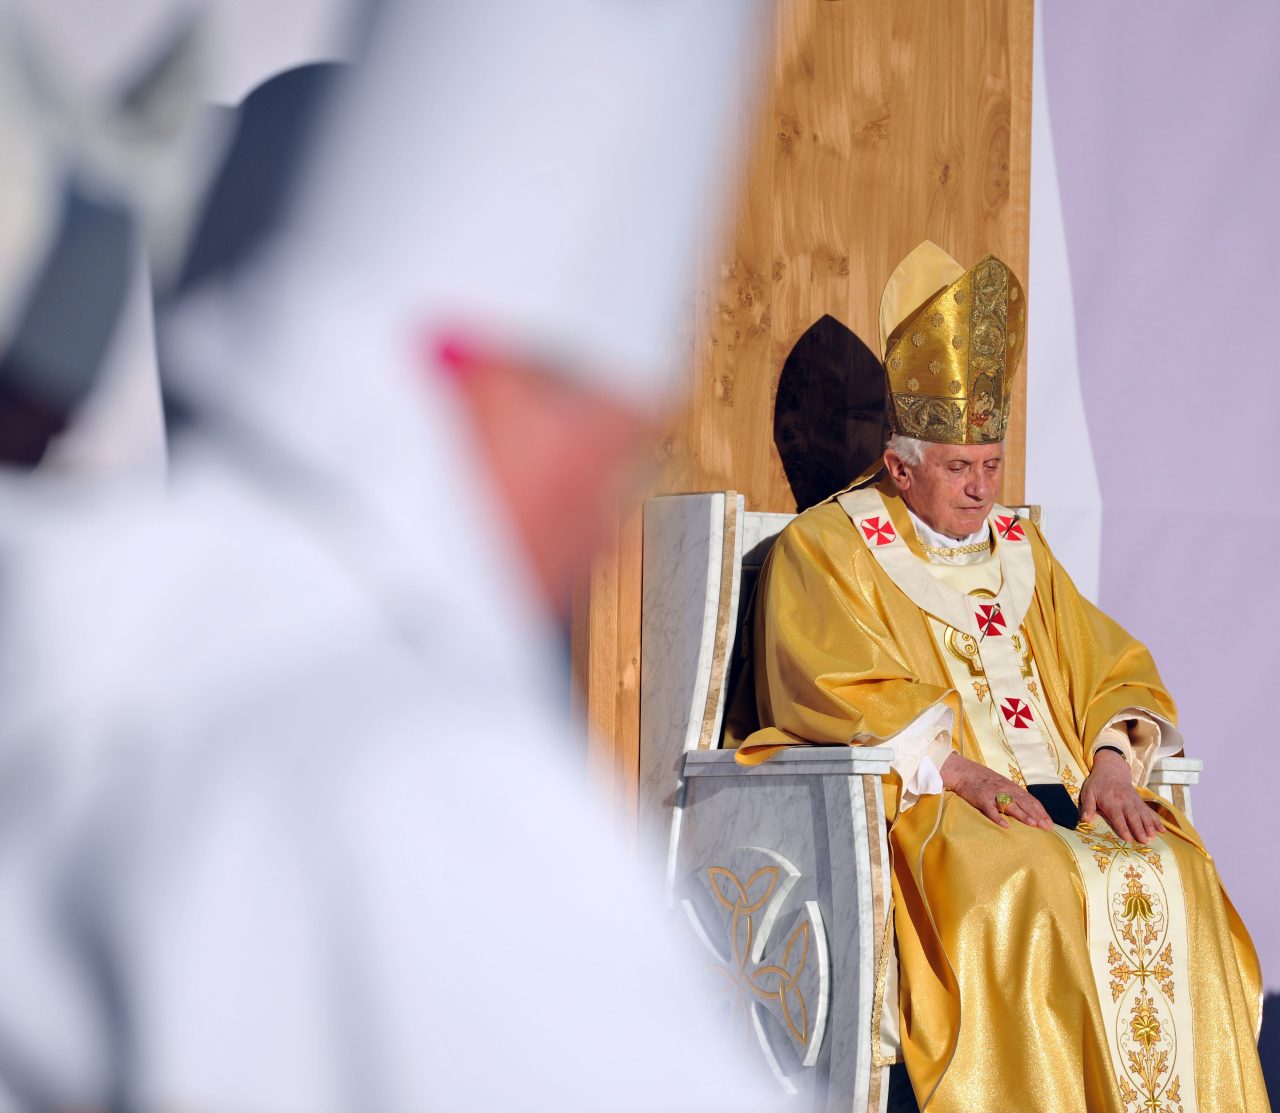 Foto: The Papal Visit | Flickr.com